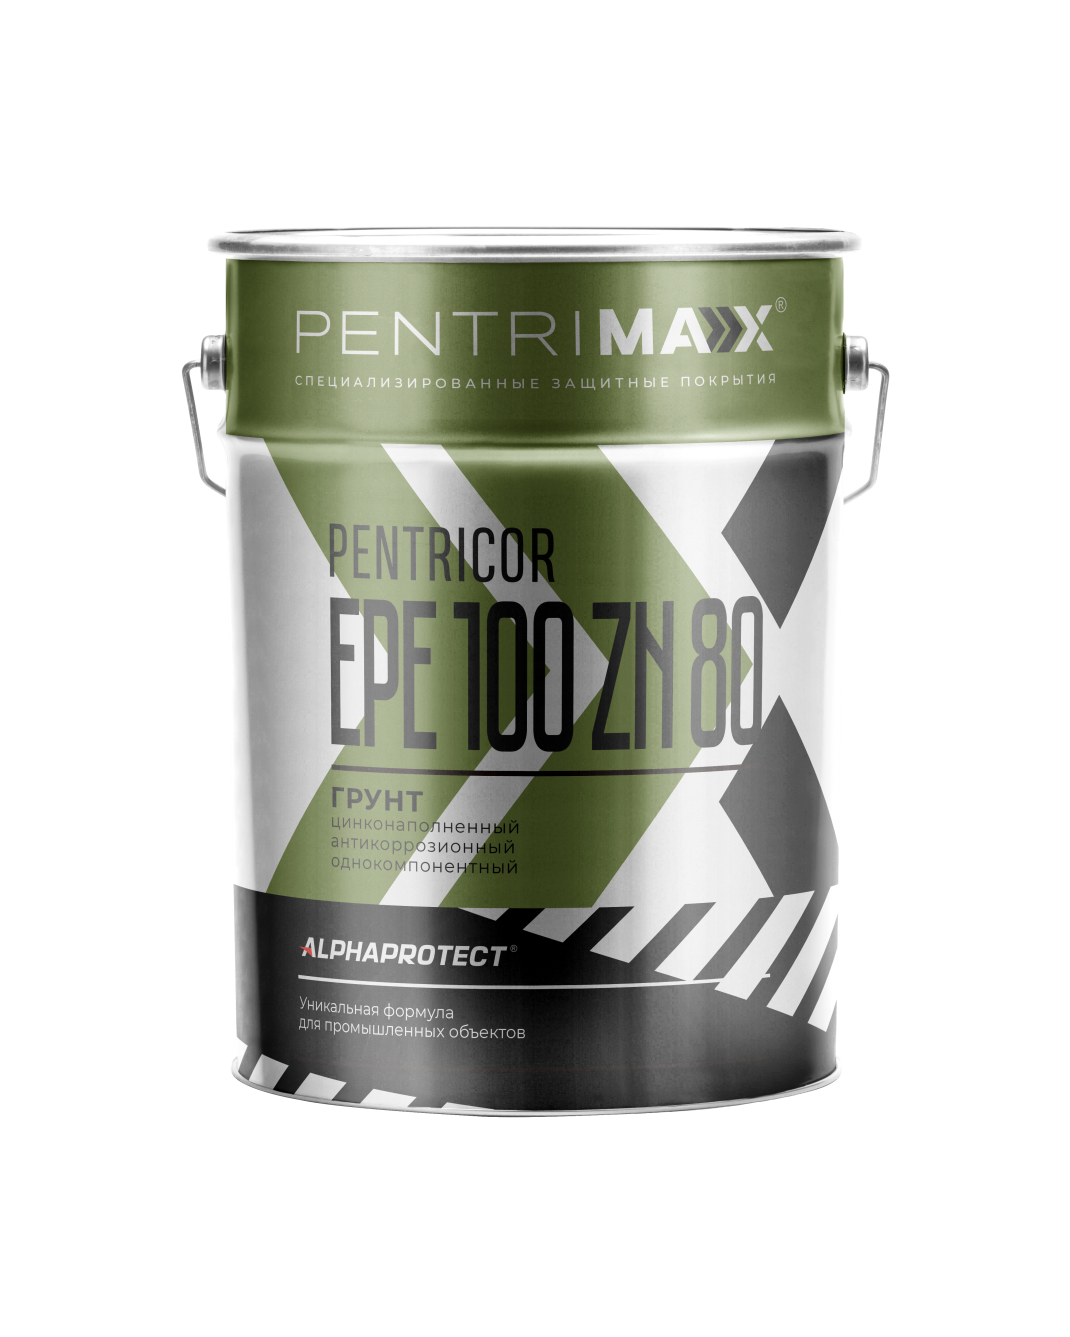 Эпоксидный грунт по ржавчине PENTRICOR EPE 100 Zn 80